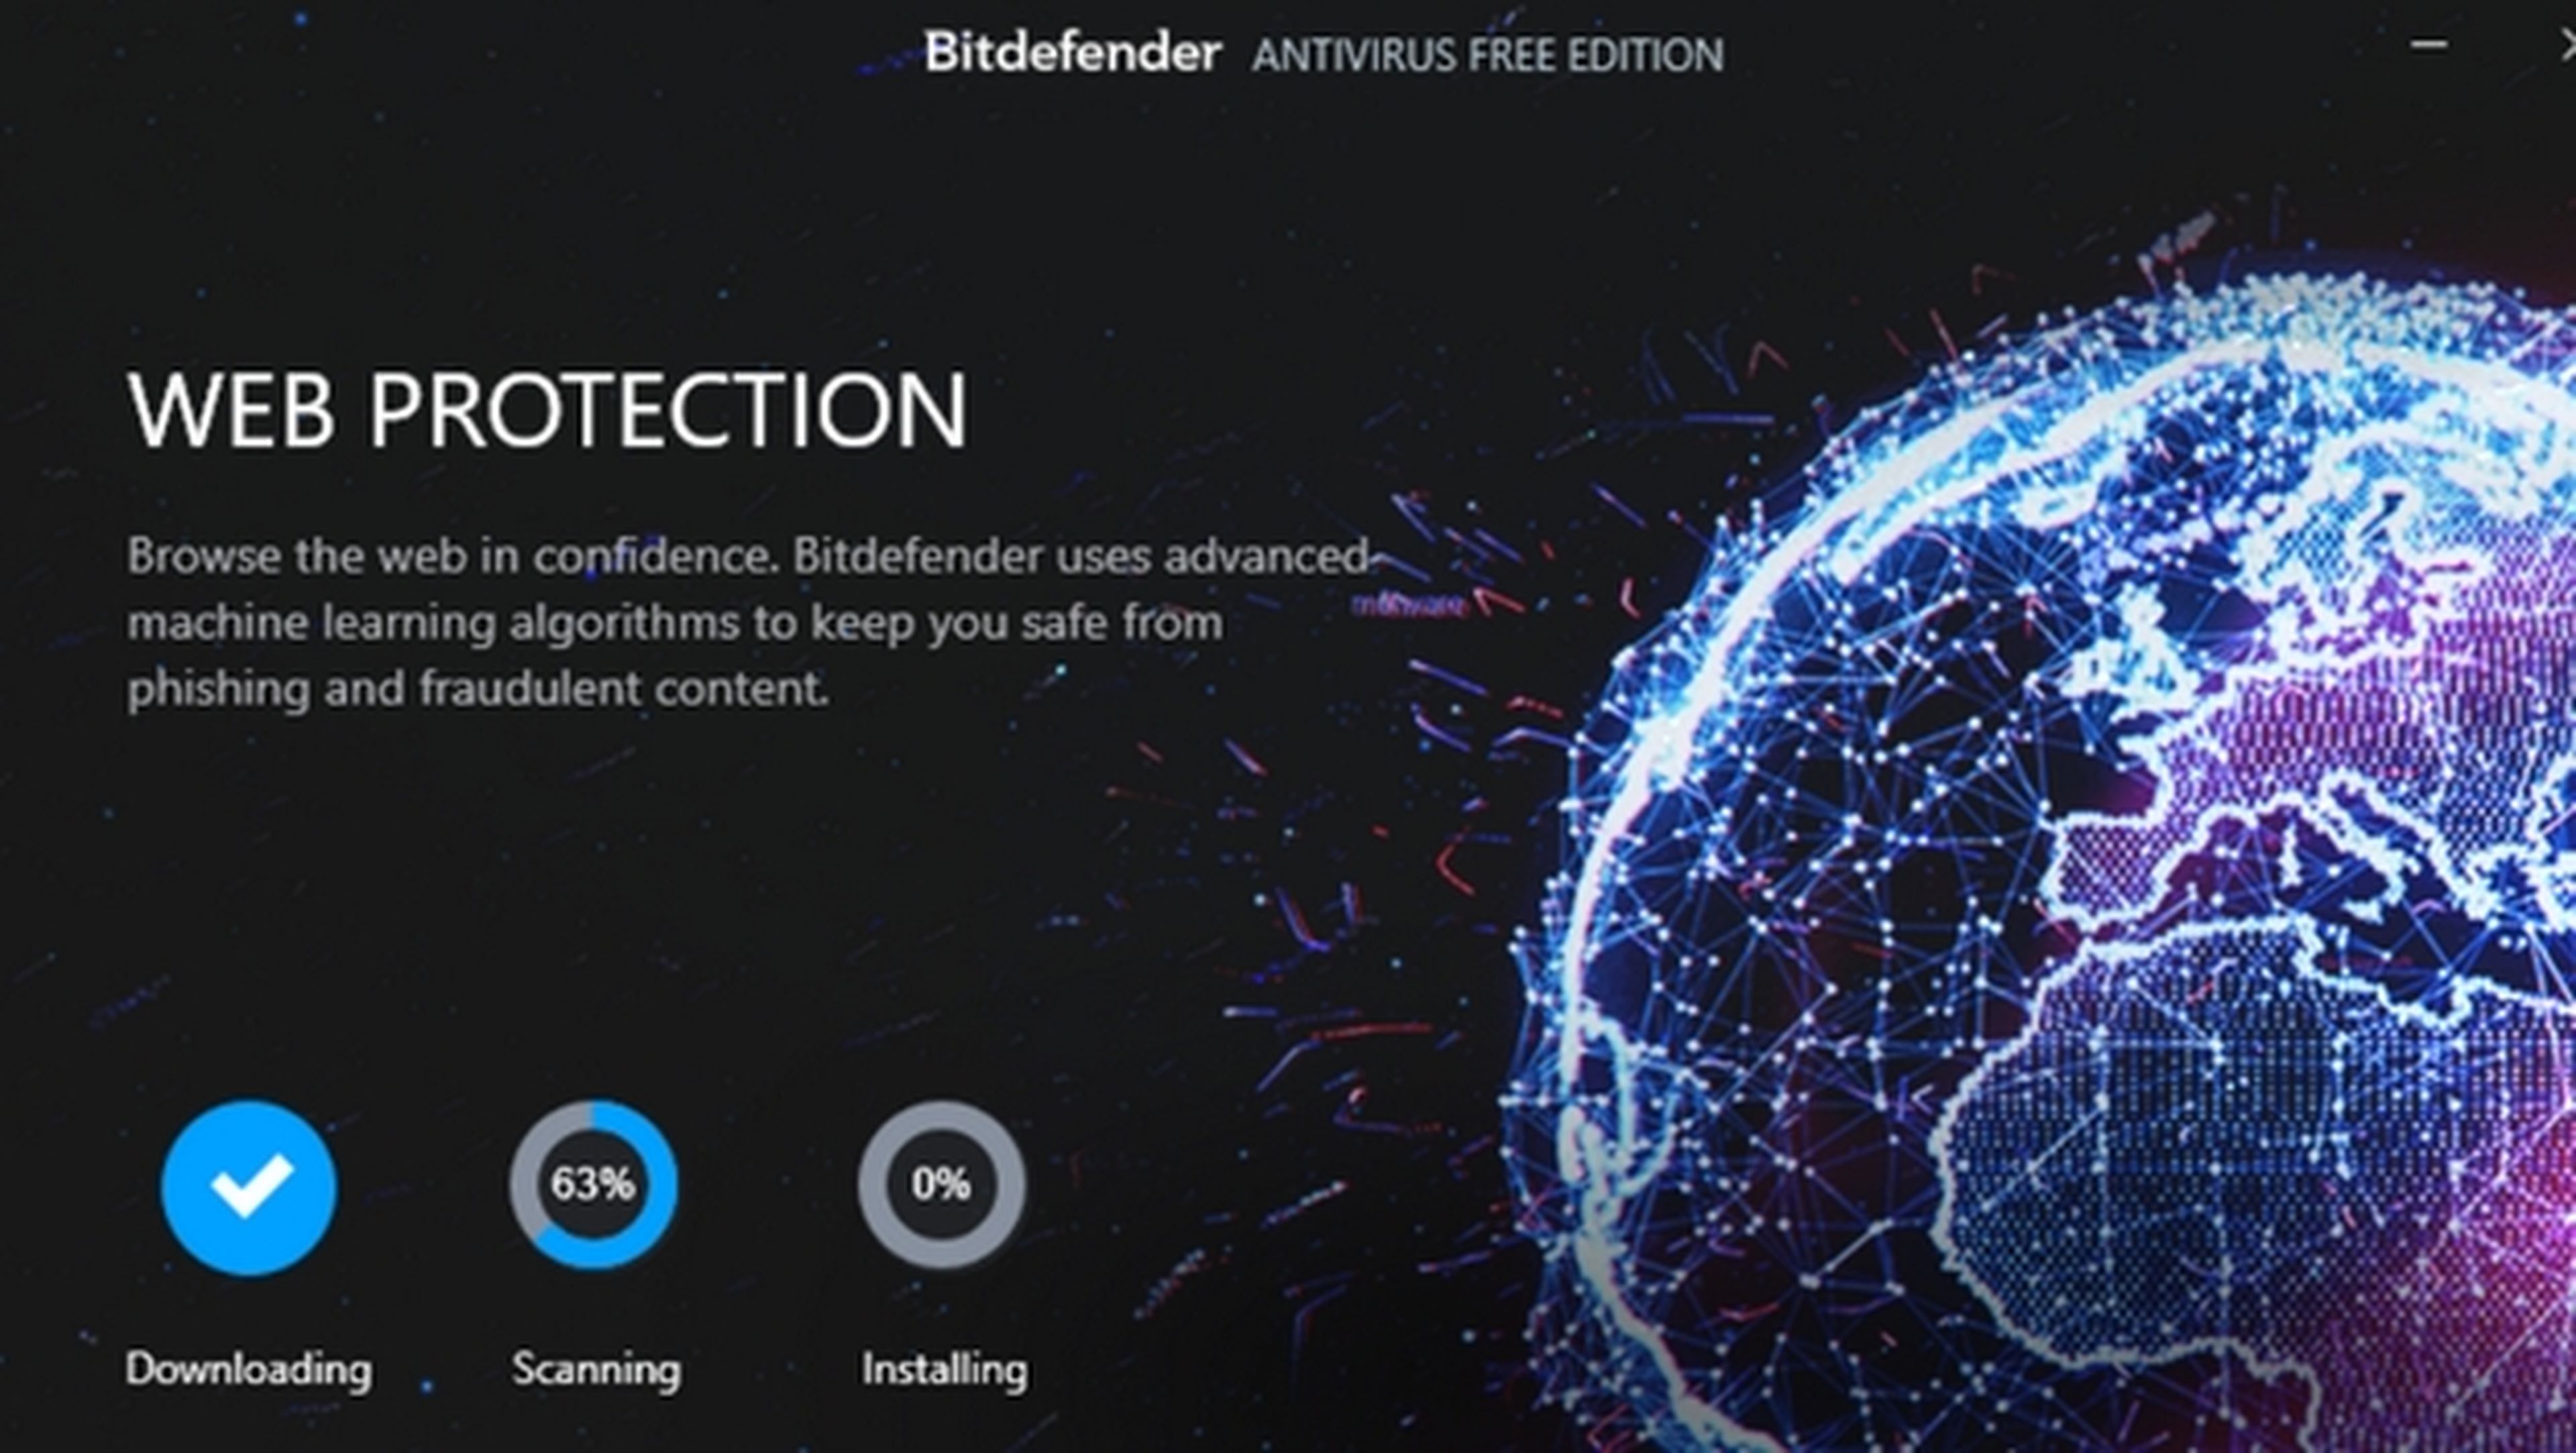 Antivirus gratis para Windows Bitdefender Antivirus Free 2017